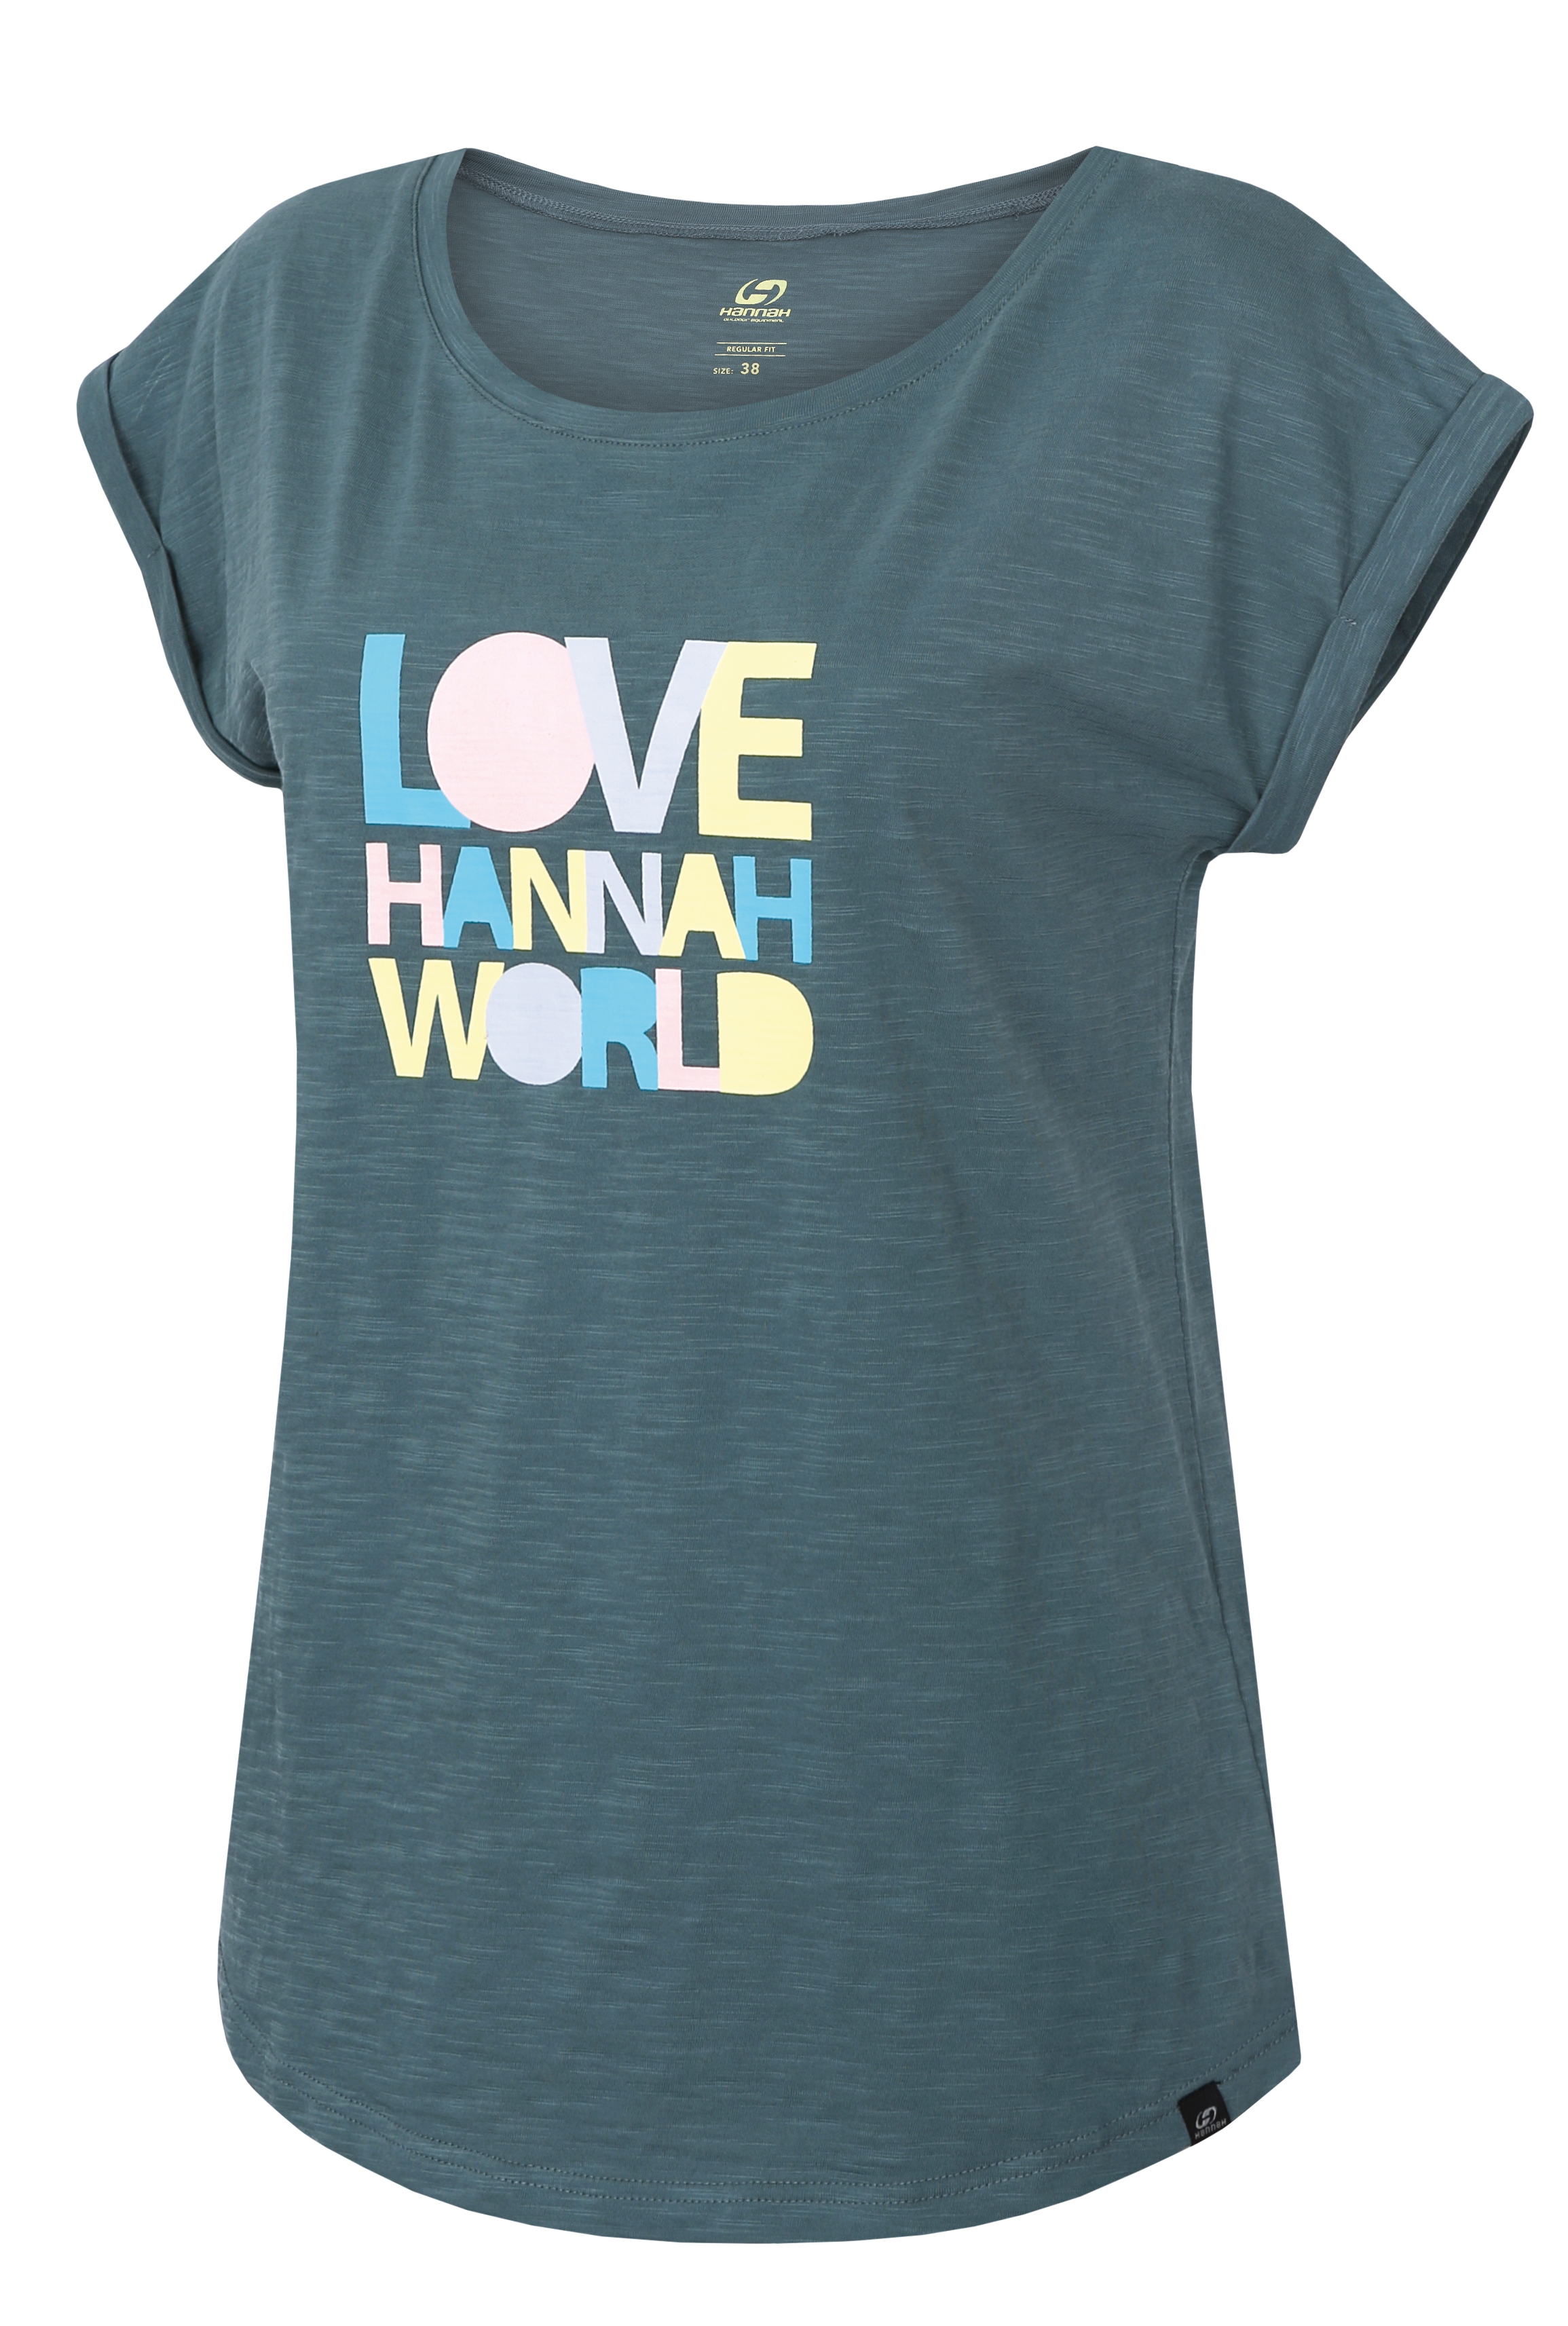 Women's T-shirt Hannah ARISSA sea pine